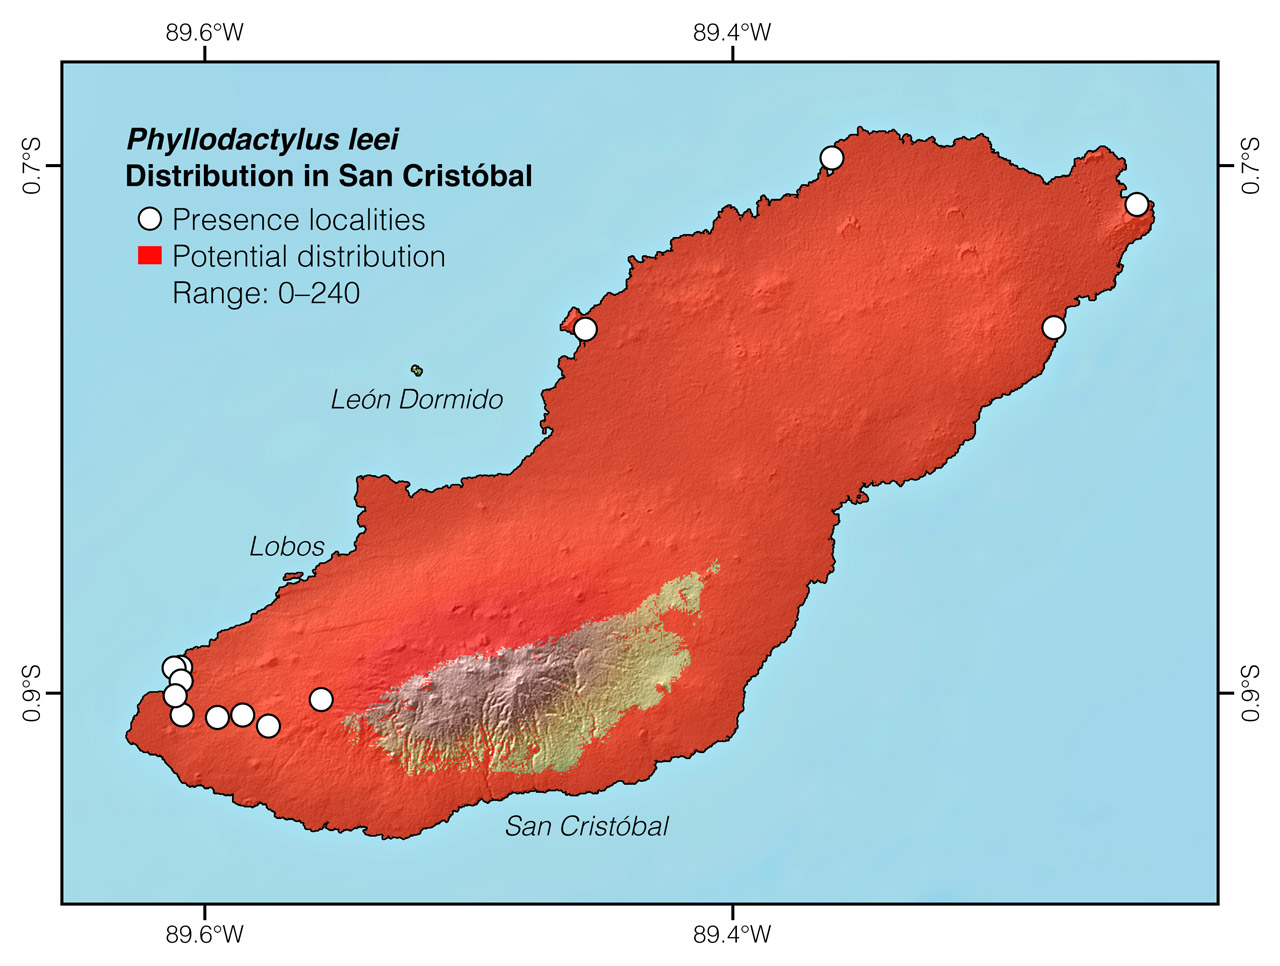 Distribution of Phyllodactylus leei in San Cristóbal Island